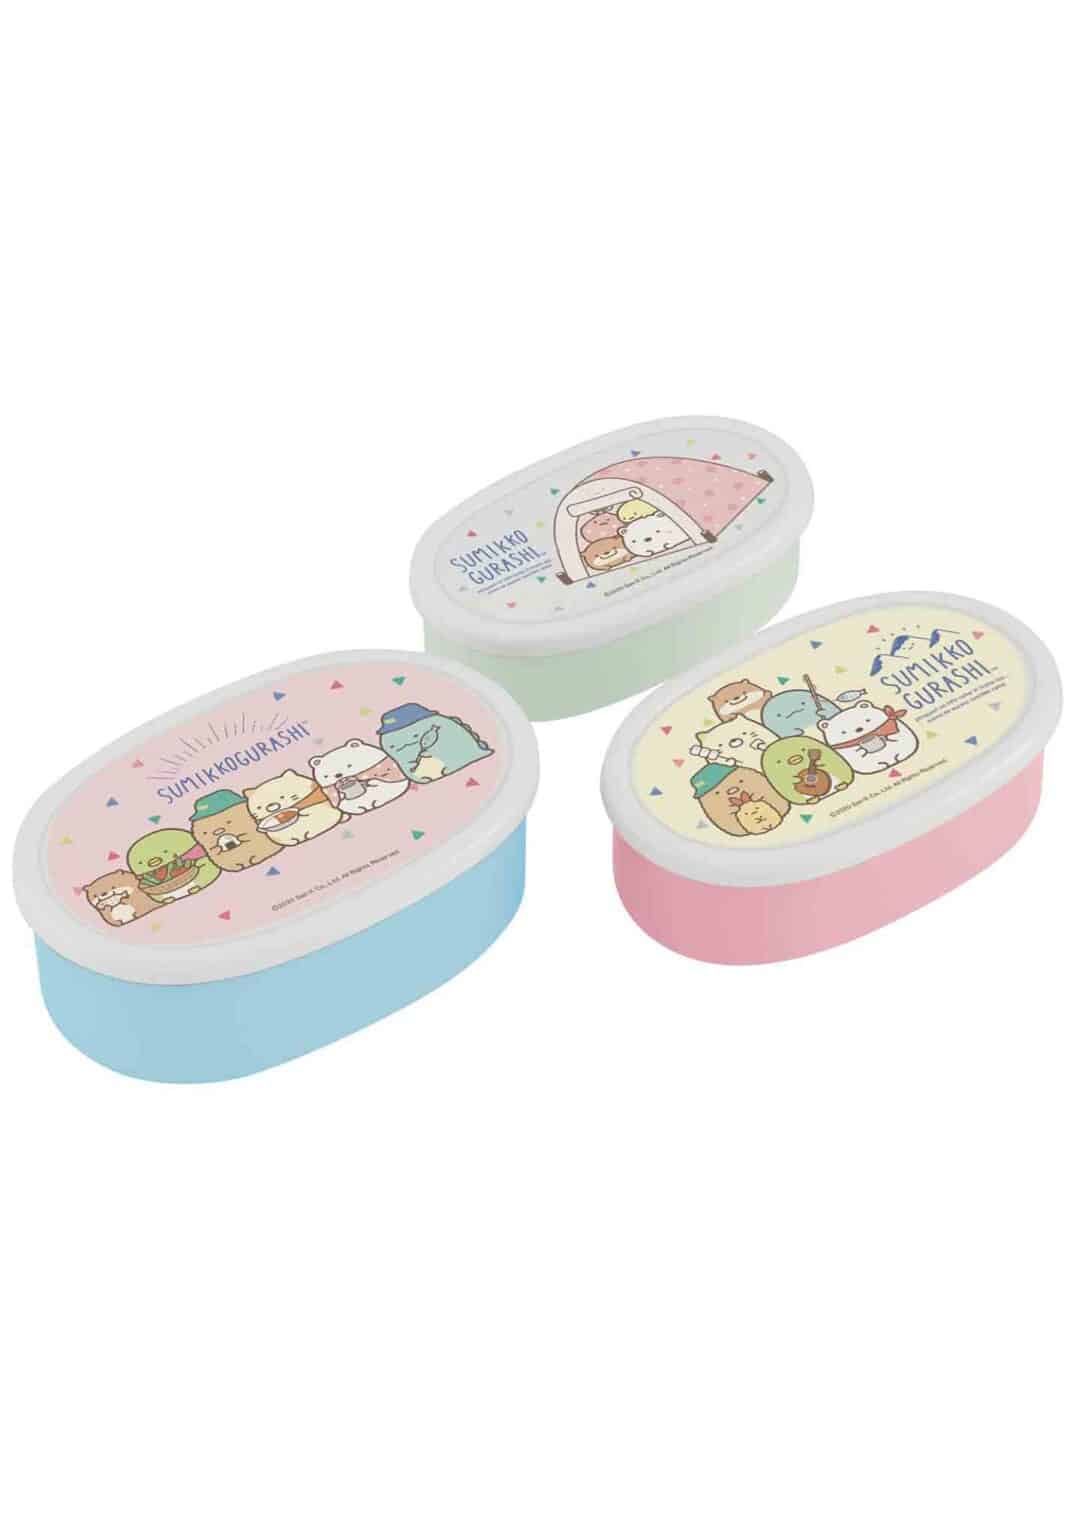 Clever Idiots Sumikko Gurashi Food Containers 3-Box Set Kawaii Gifts 4973307524622